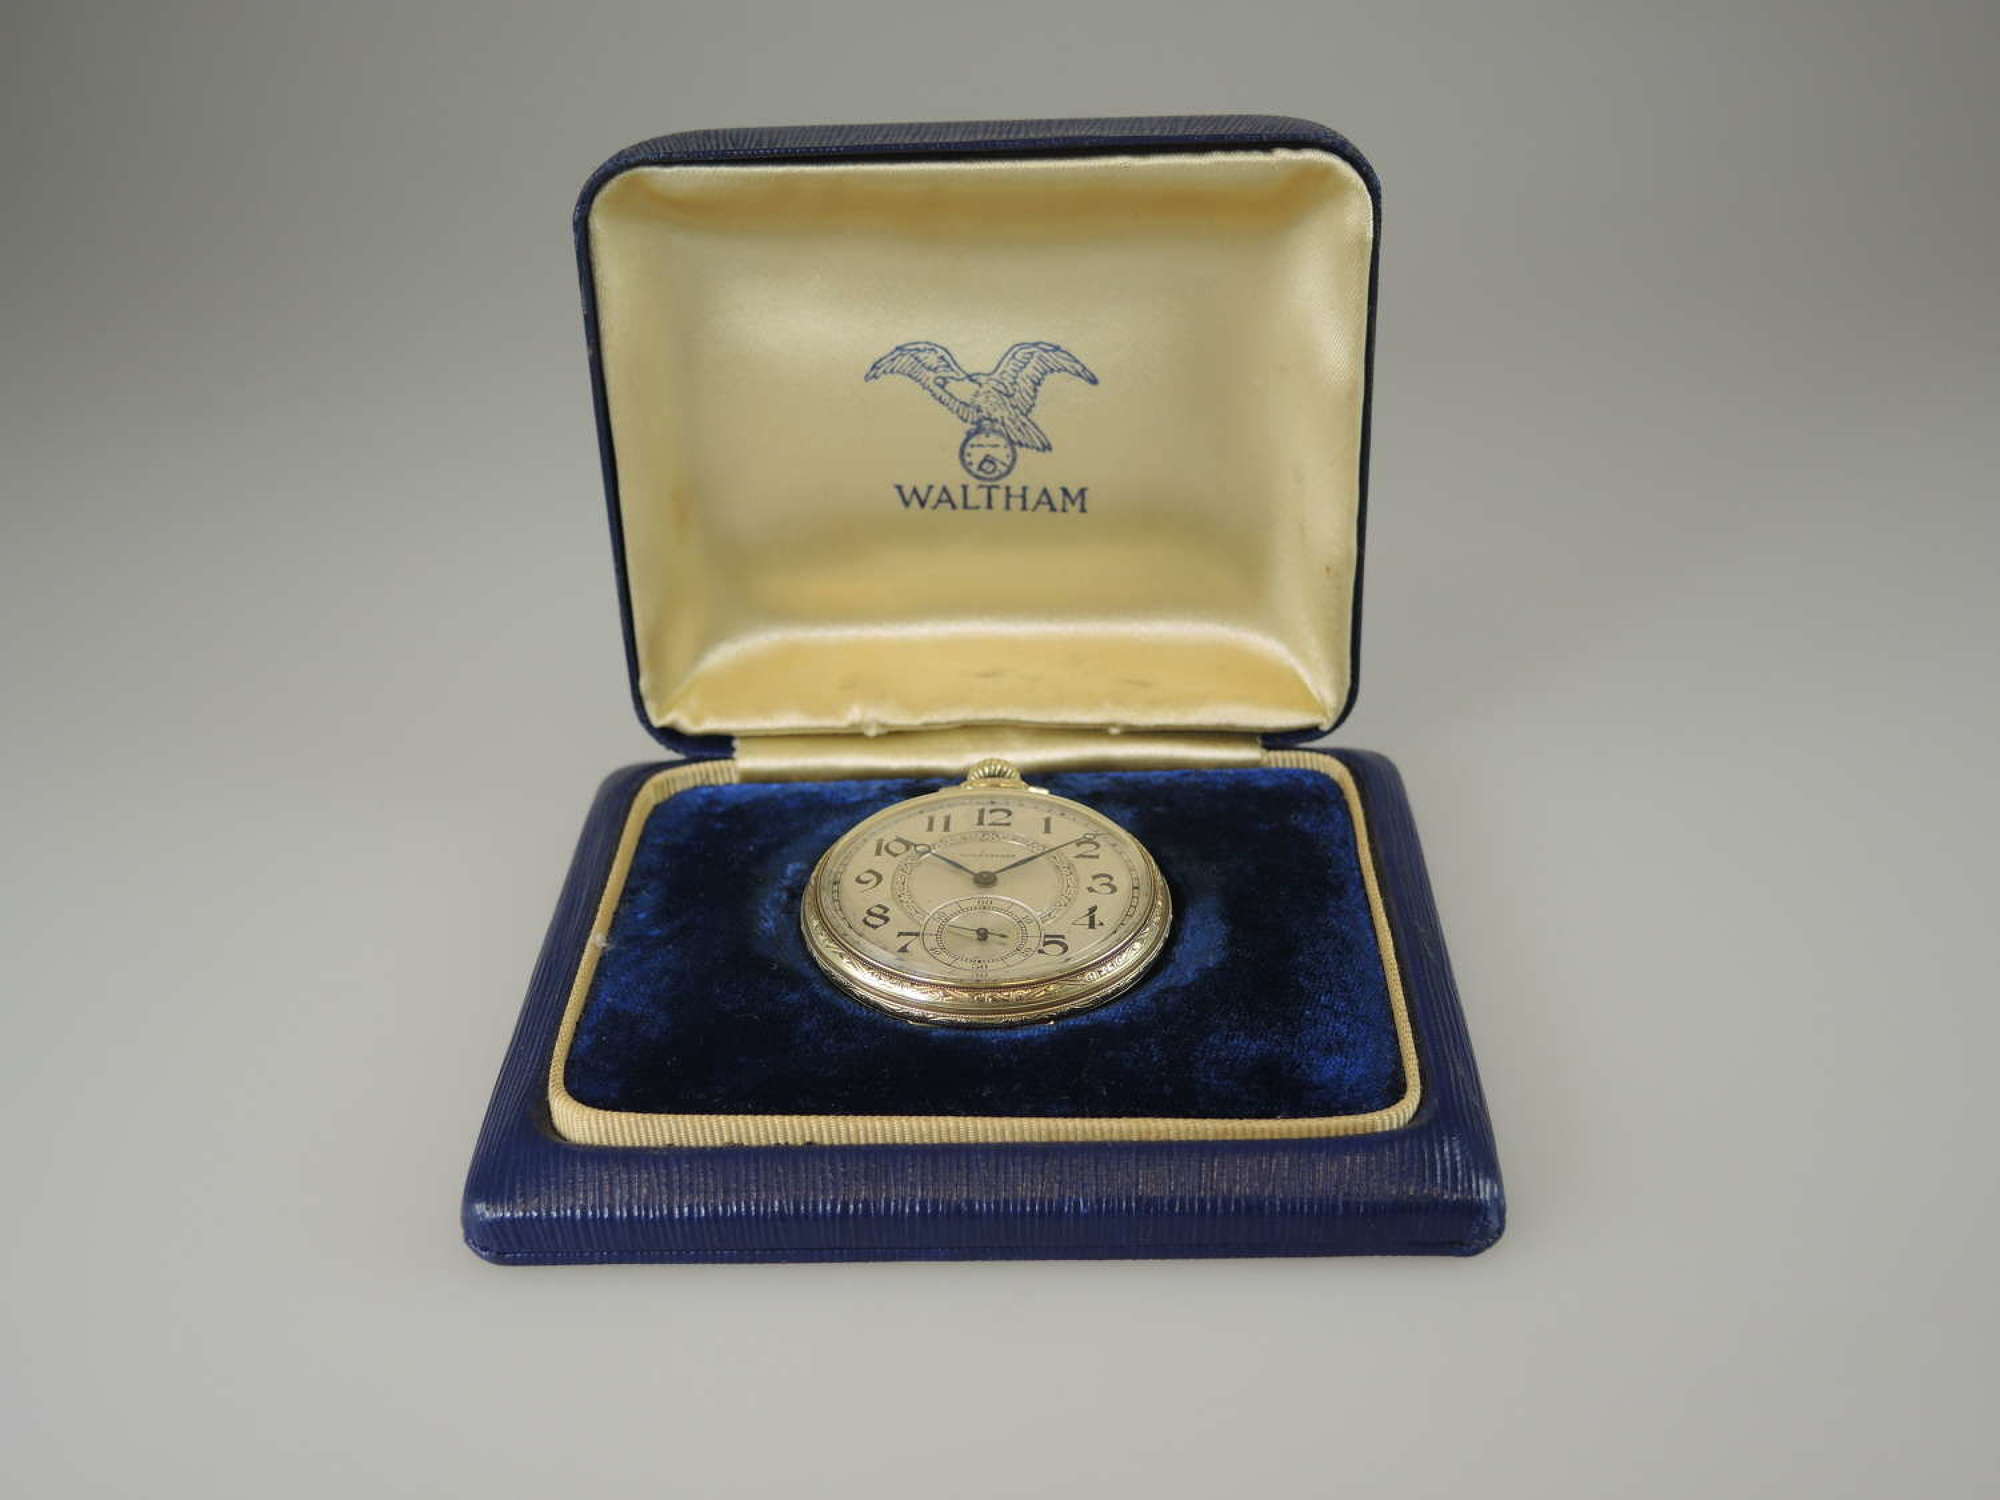 Vintage pocket watch by Waltham with Original Box c1931